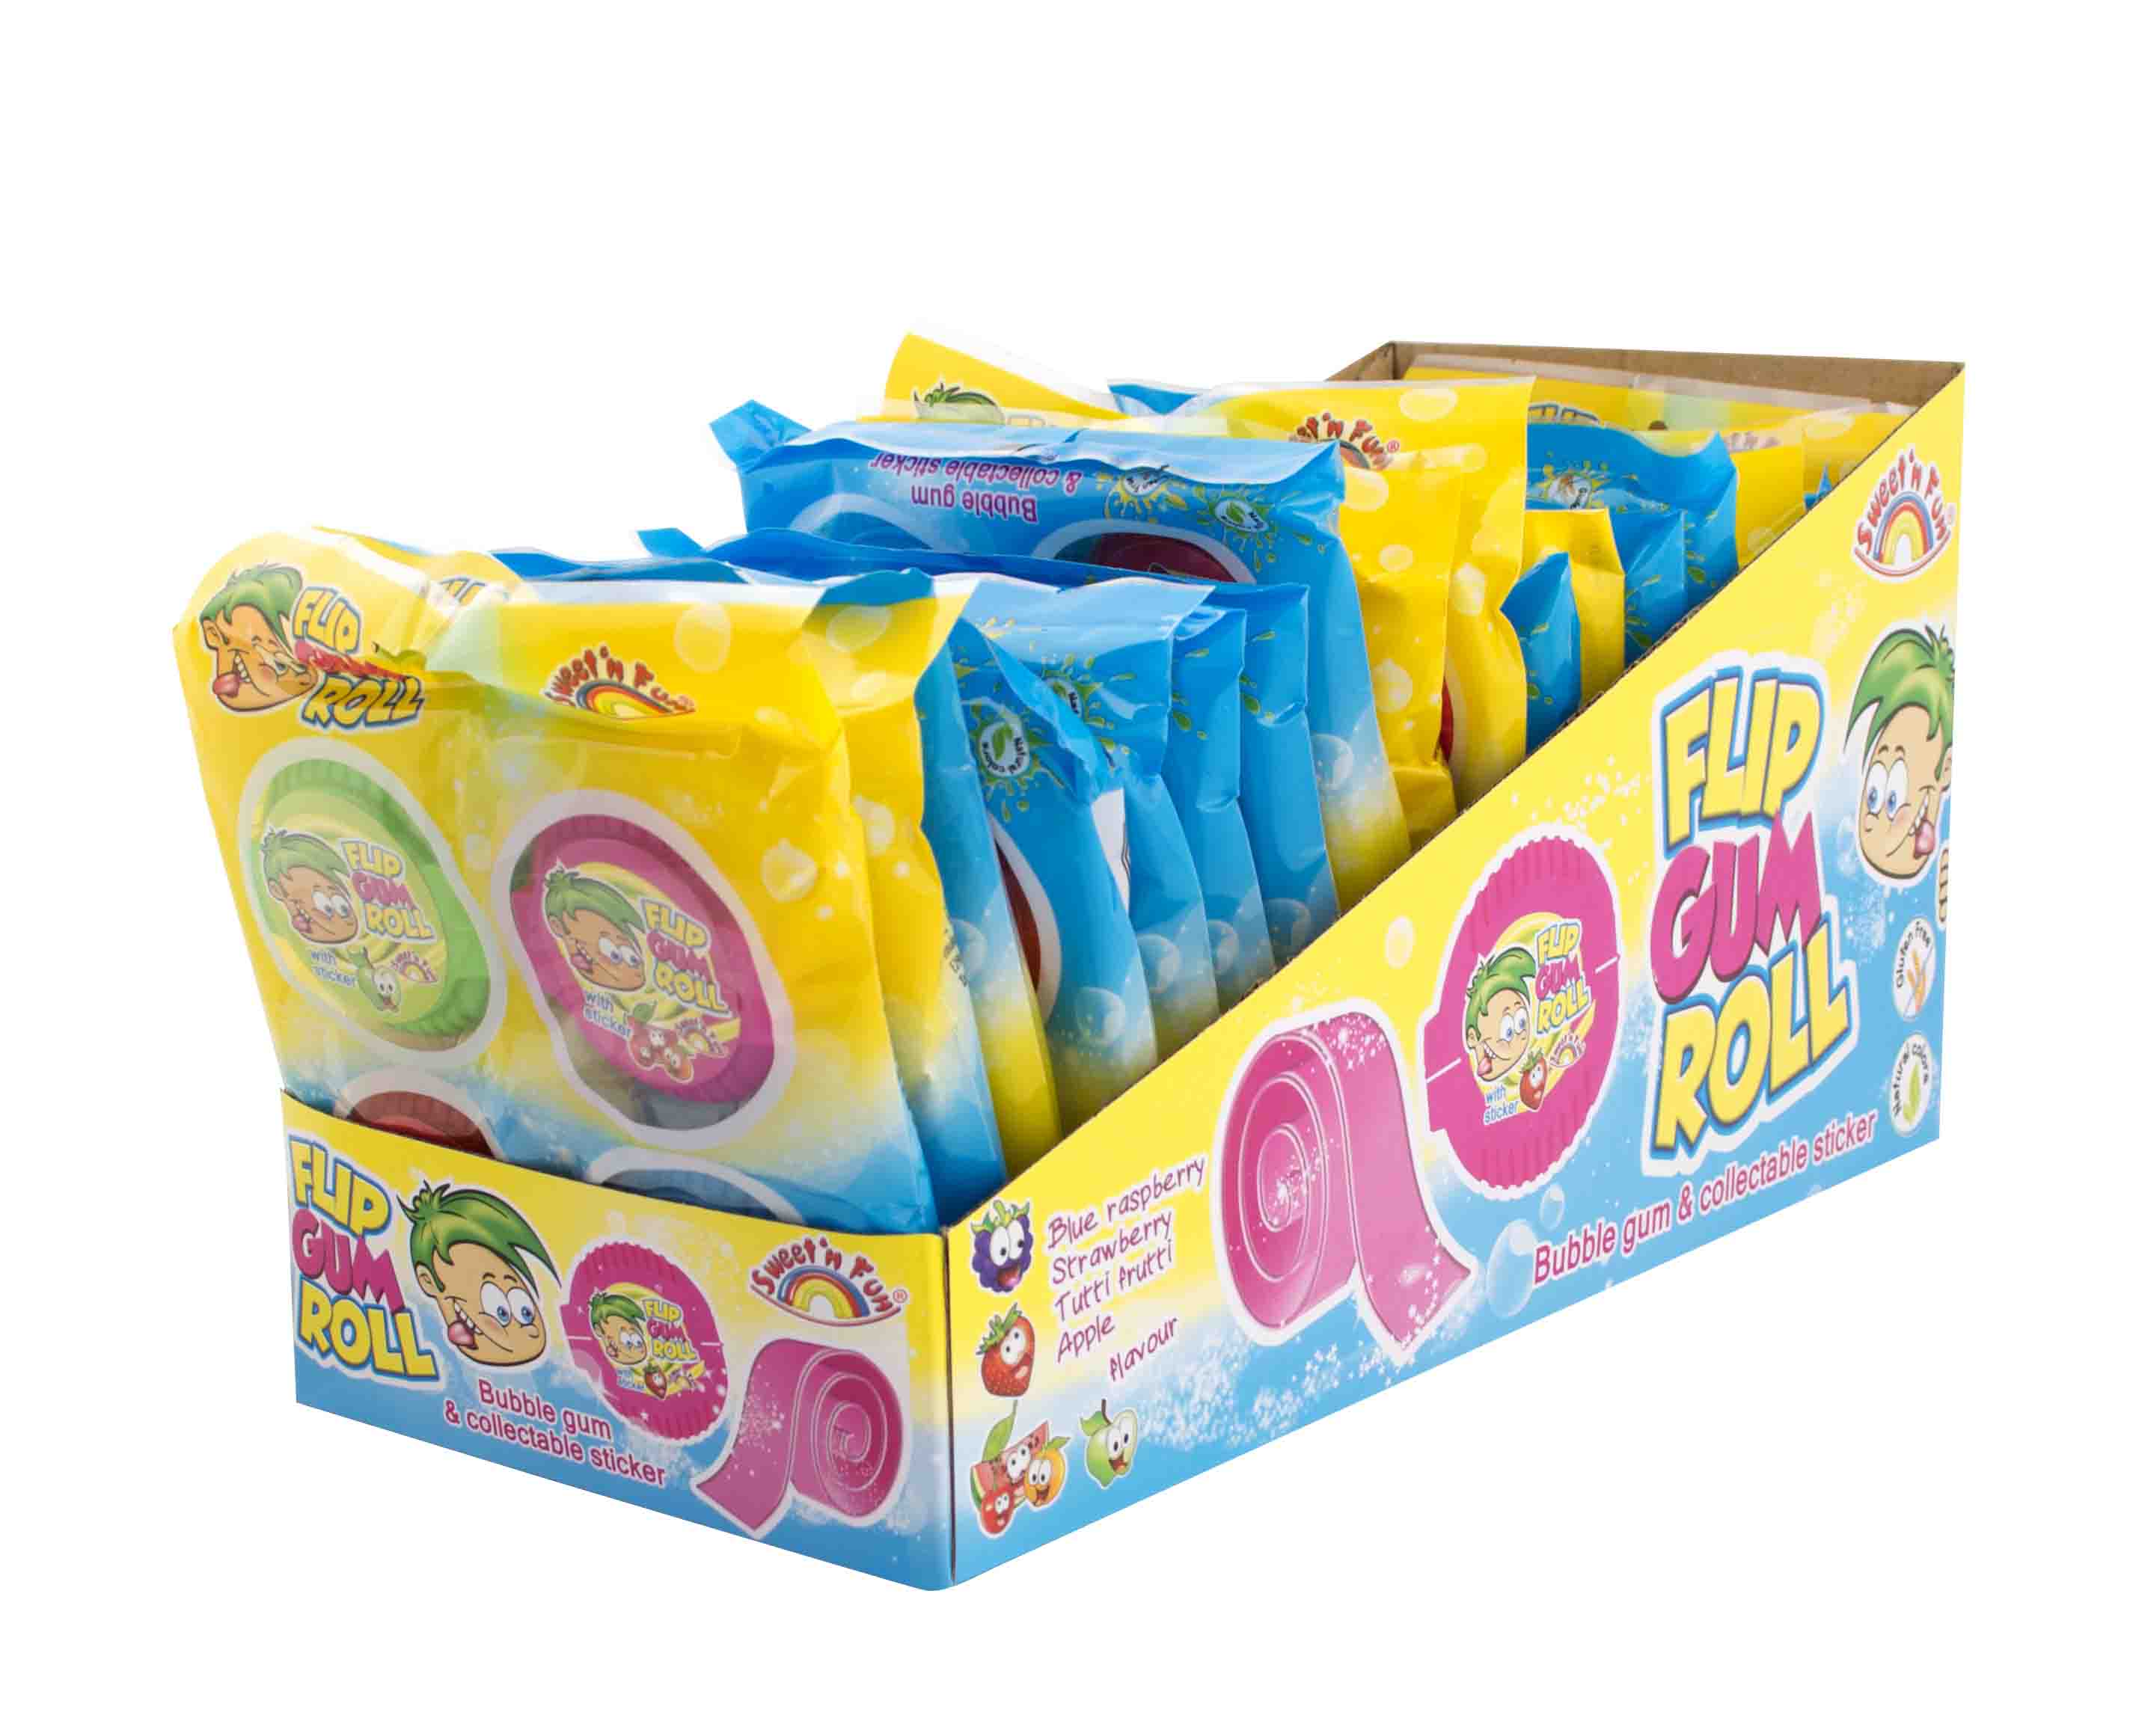 Flip gum roll 4pack – roller žvýkačka 4x16g ( 64g )